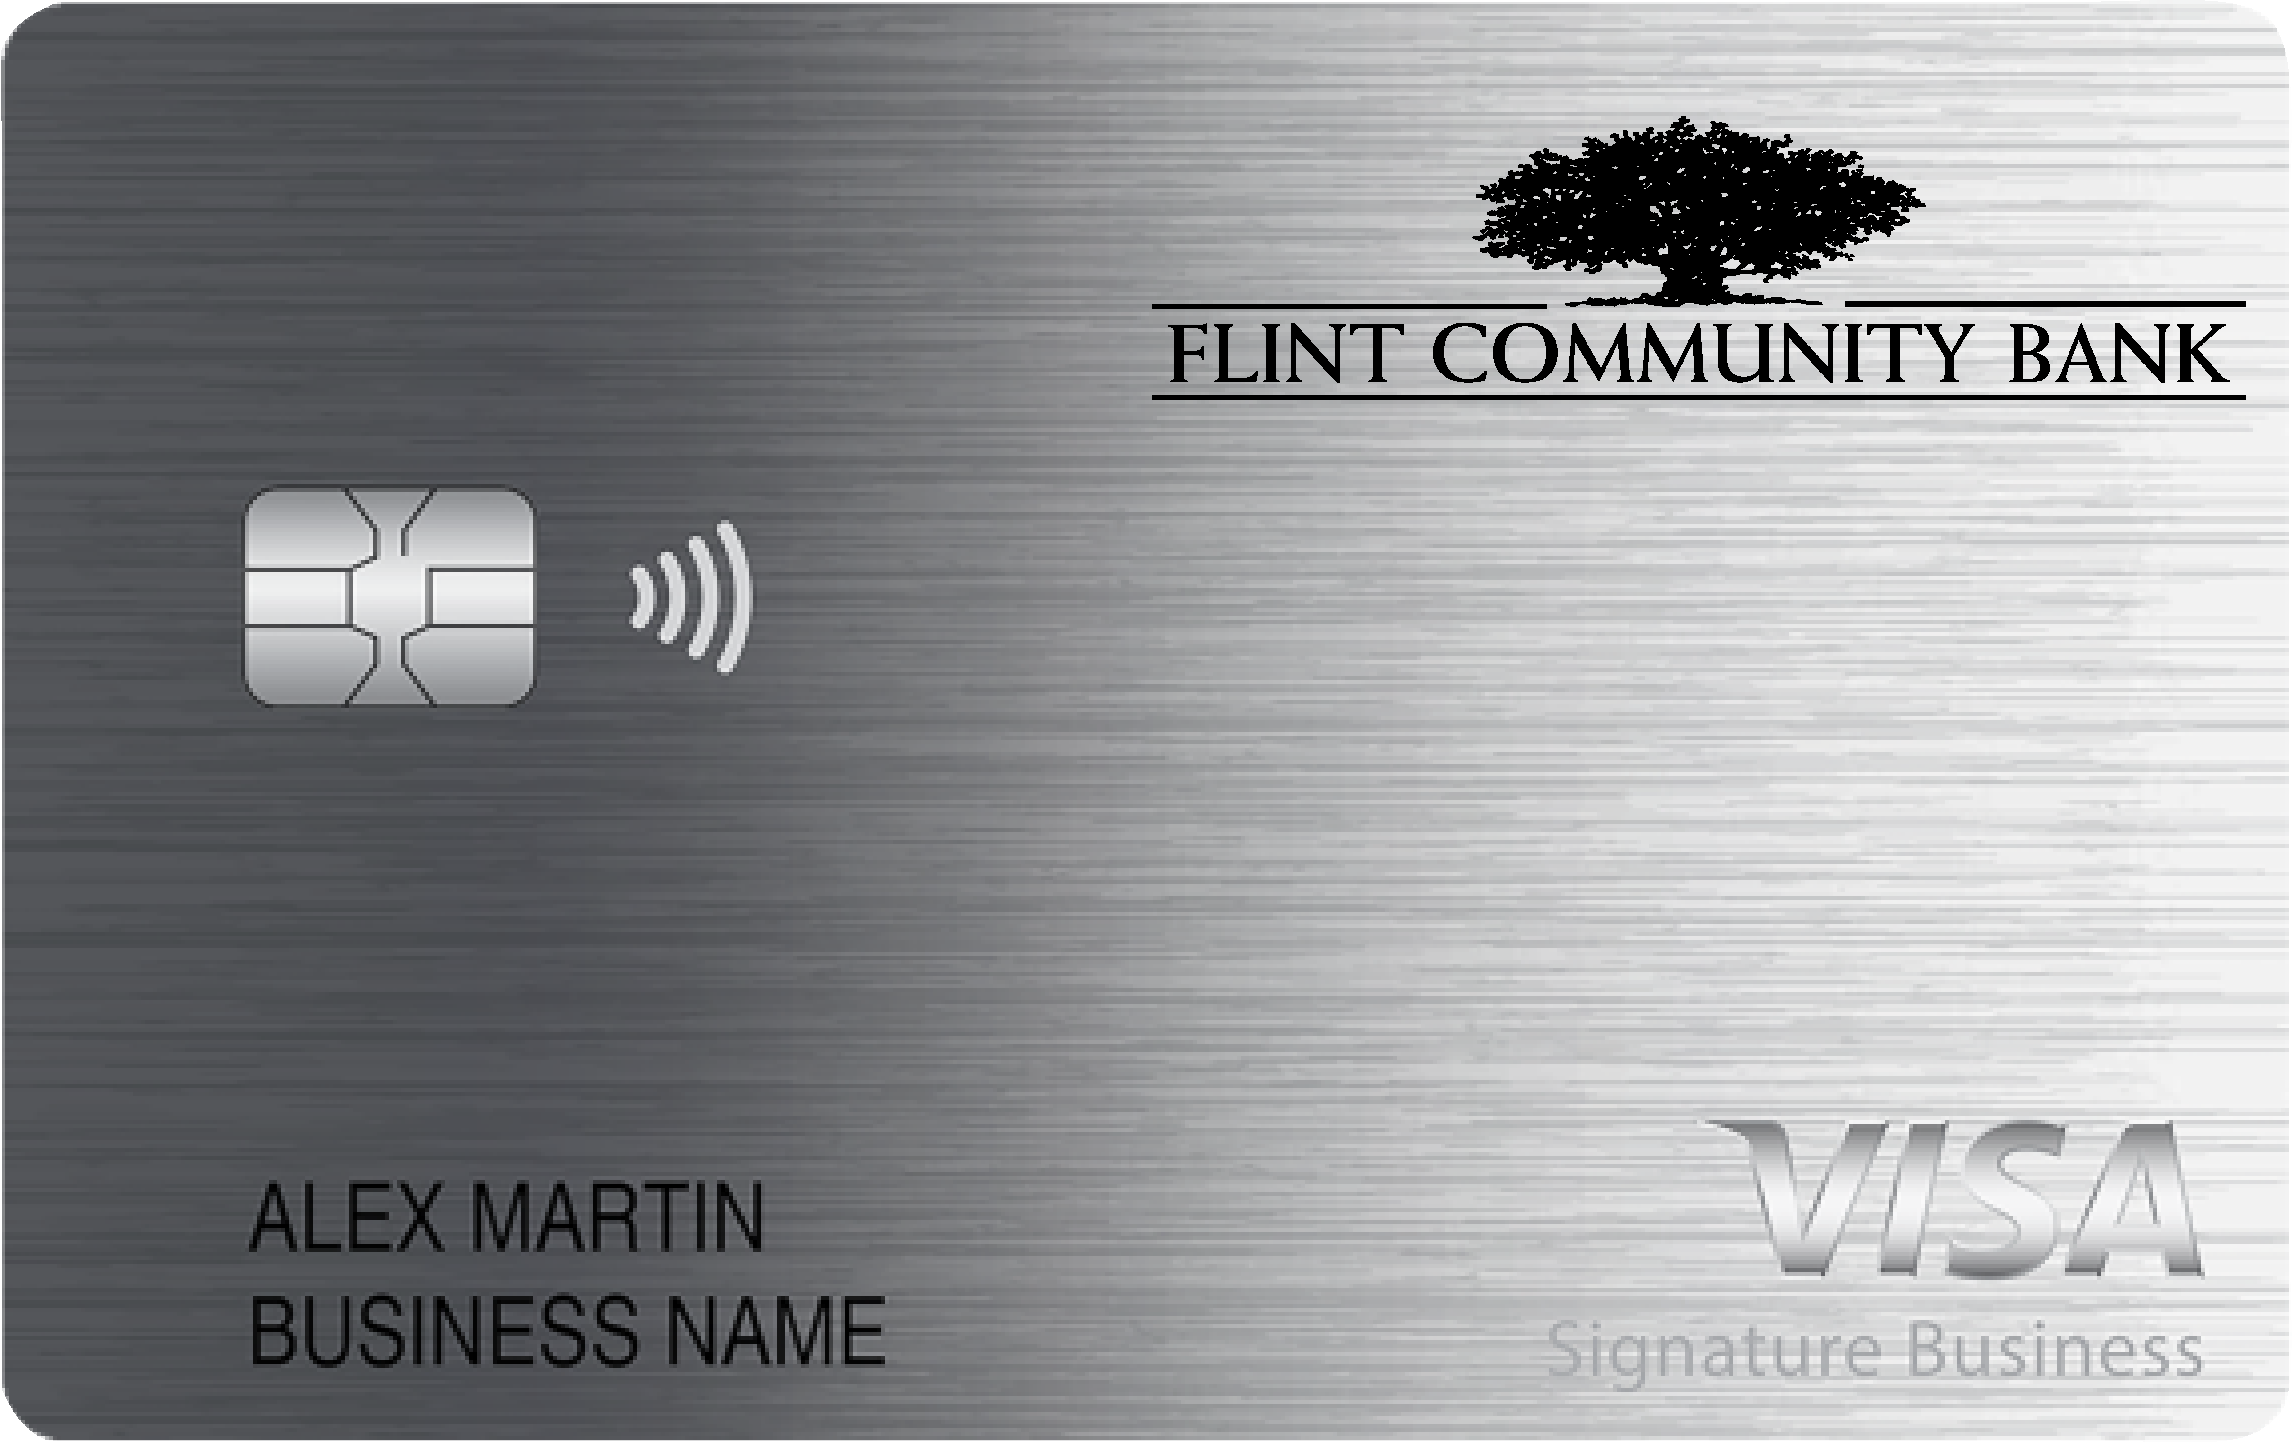 Flint Community Bank Smart Business Rewards Card